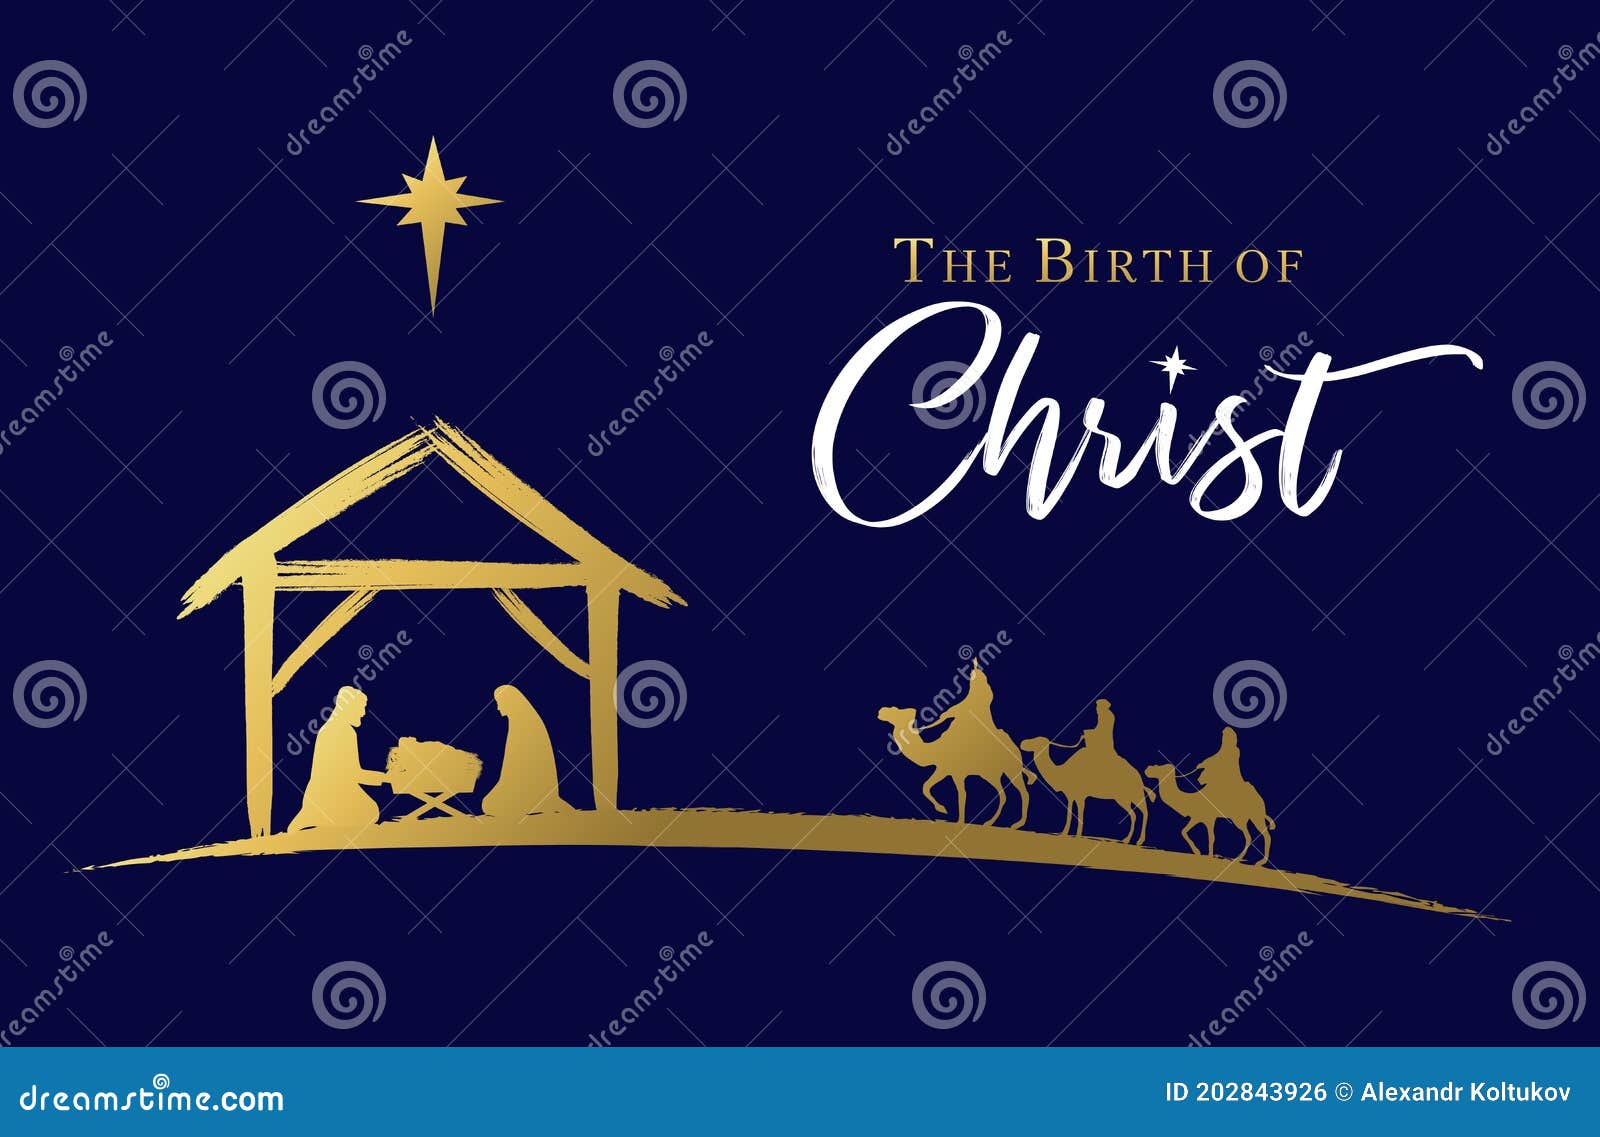 The Birth of Christ, Nativity Scene of Baby Jesus in the Manger ...